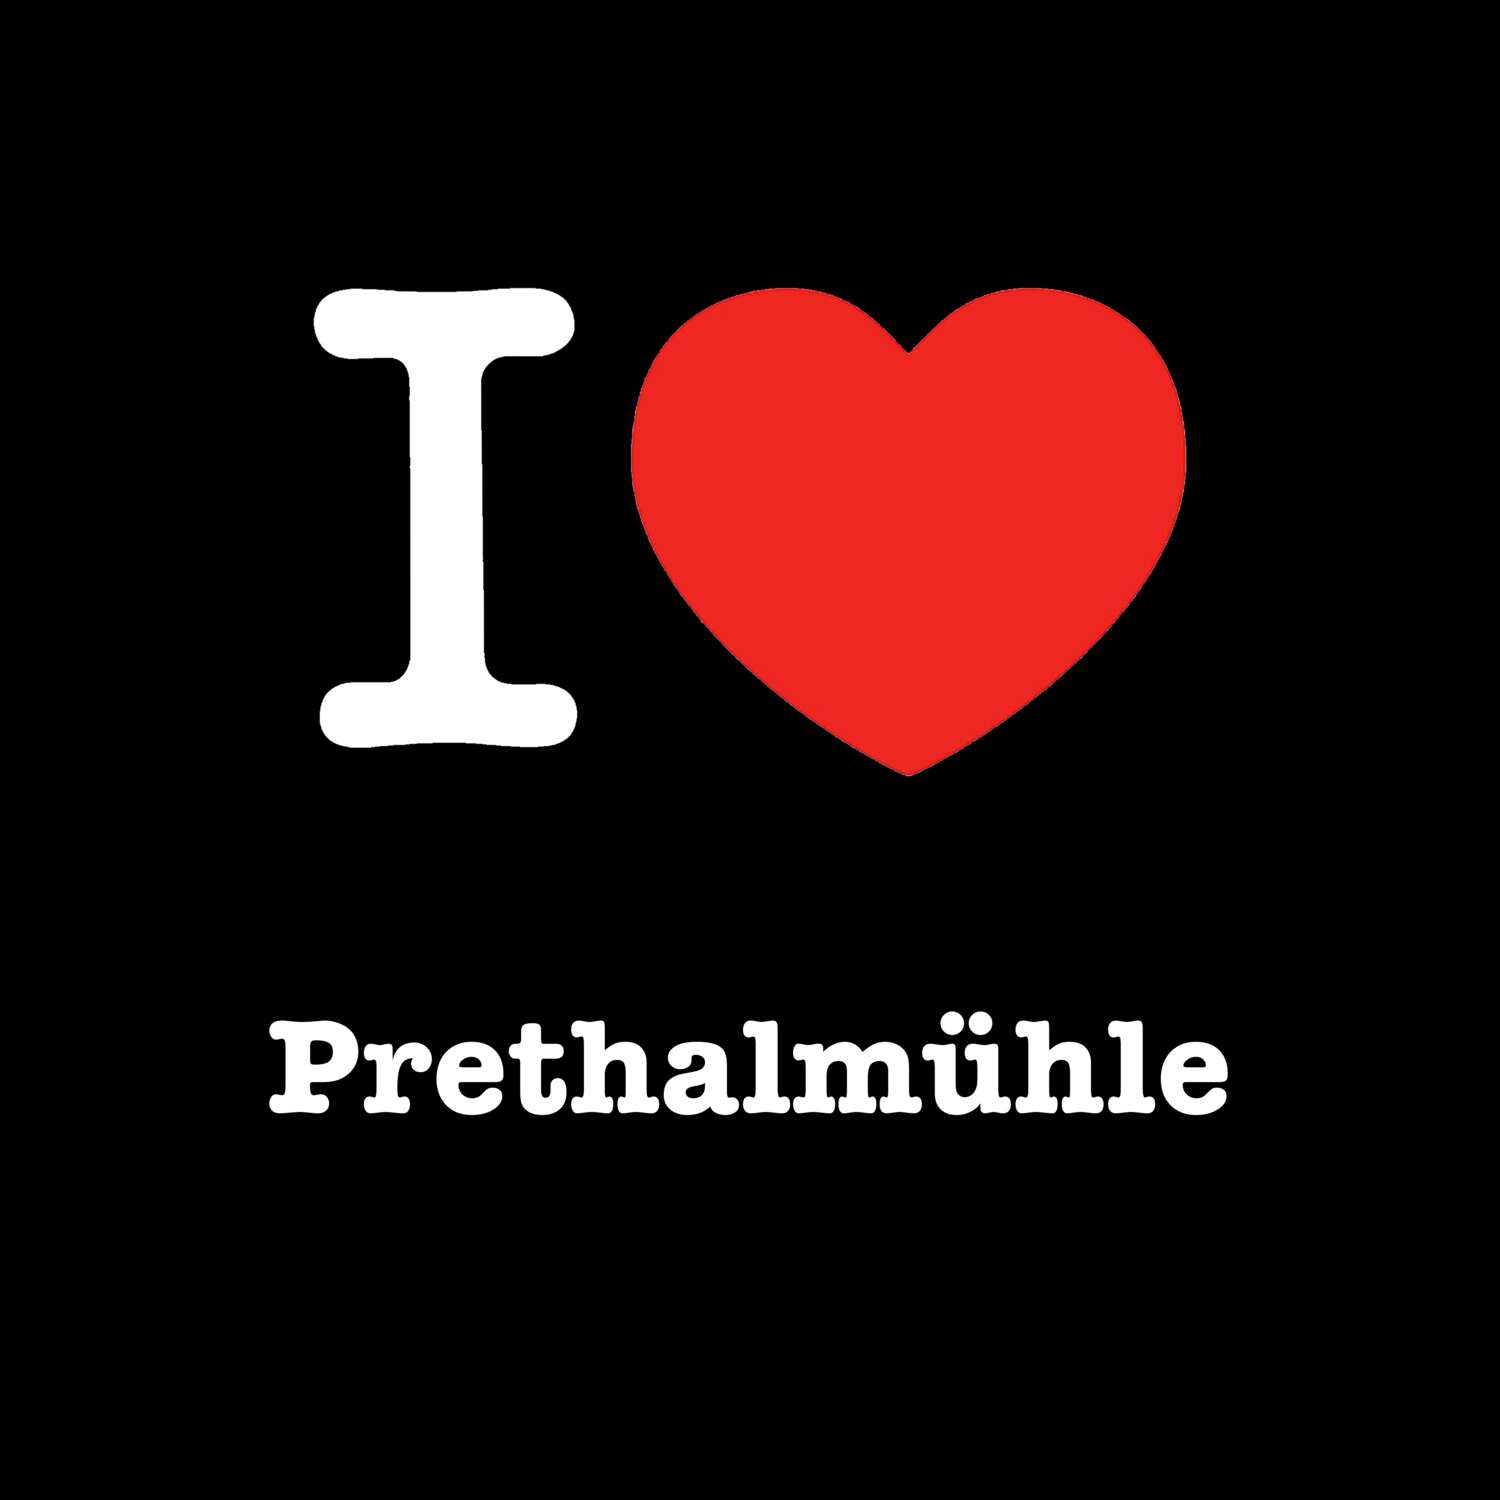 Prethalmühle T-Shirt »I love«